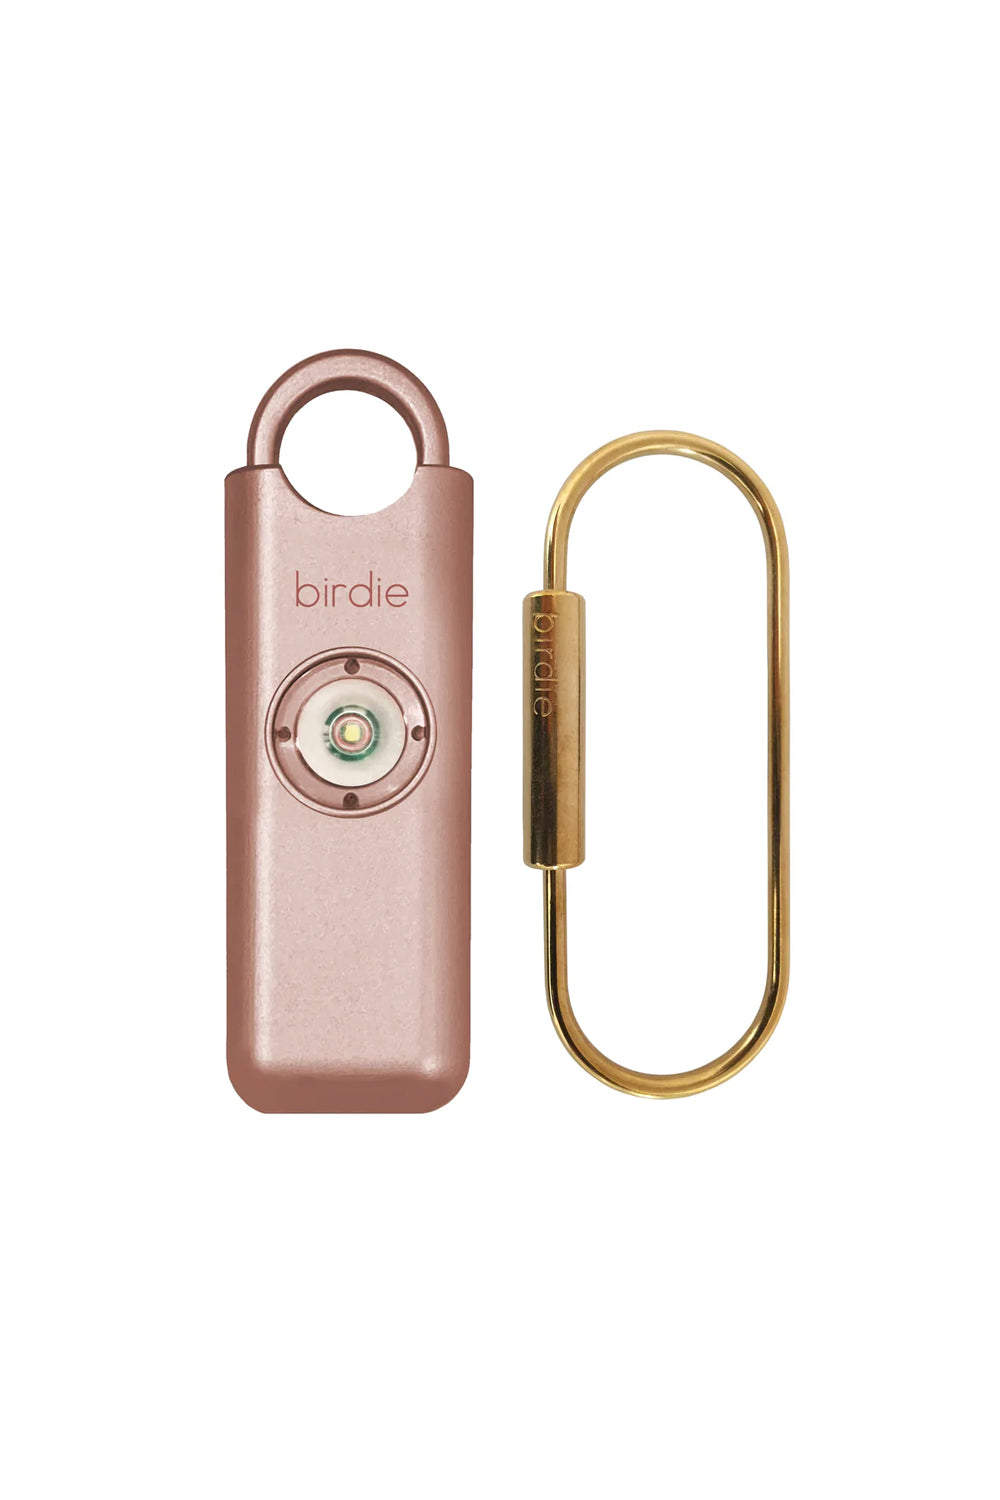 She's Birdie: Alarm Keychain - Metallic Rose | Makk Fashions